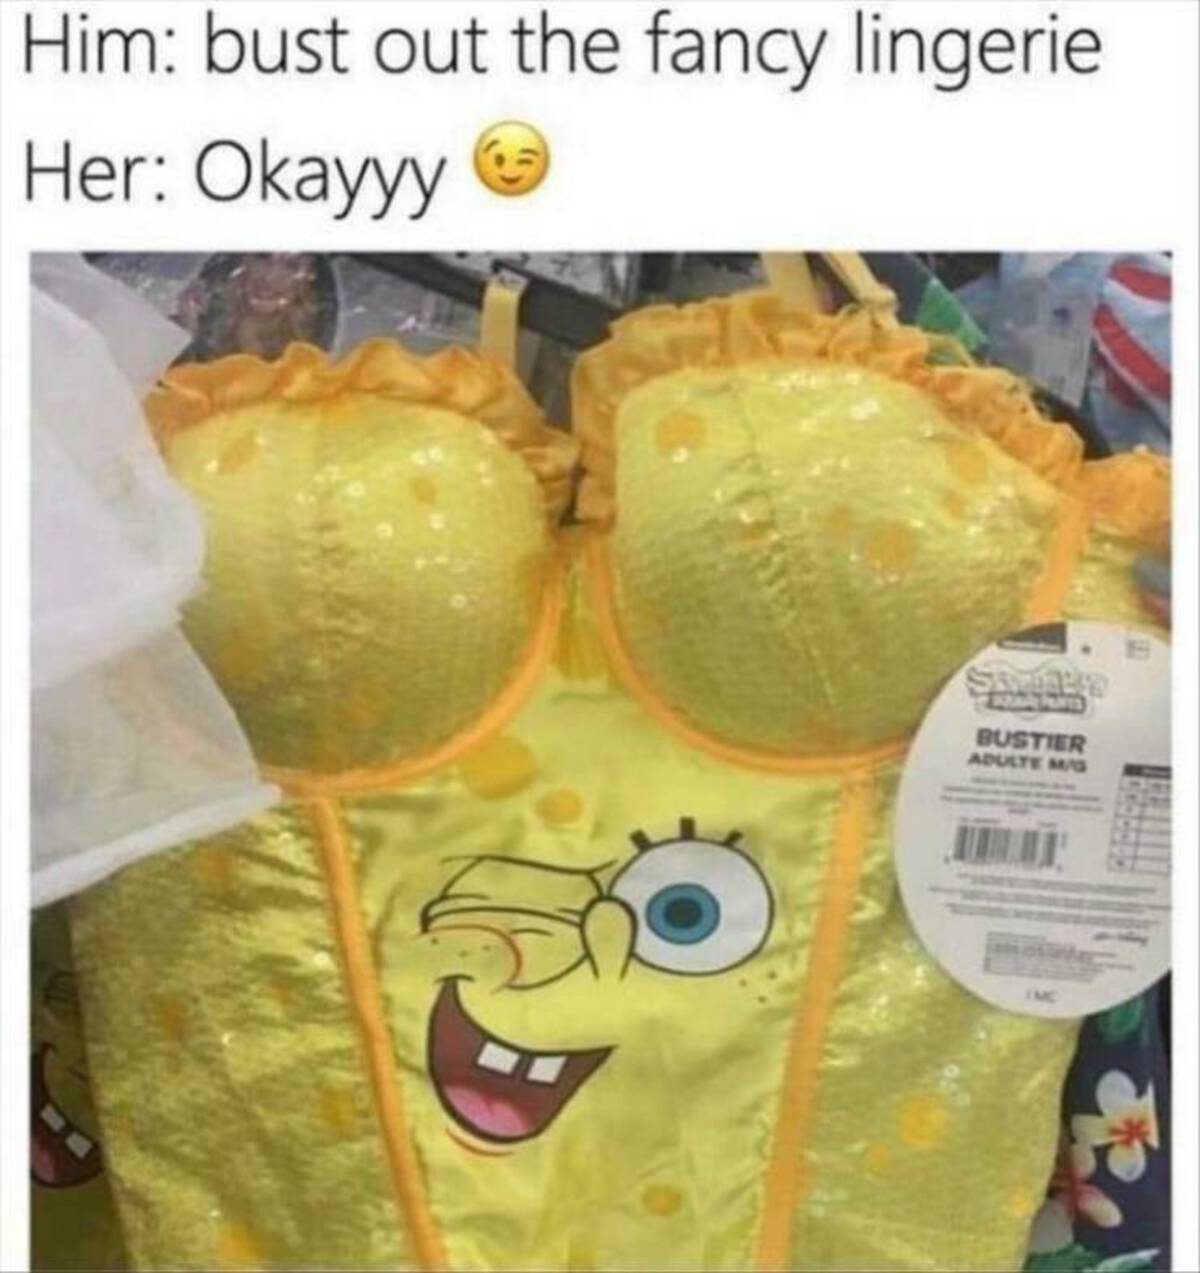 bust out the fancy lingerie meme - Him bust out the fancy lingerie Her Okayyy Stoly Bustier Adulte MS